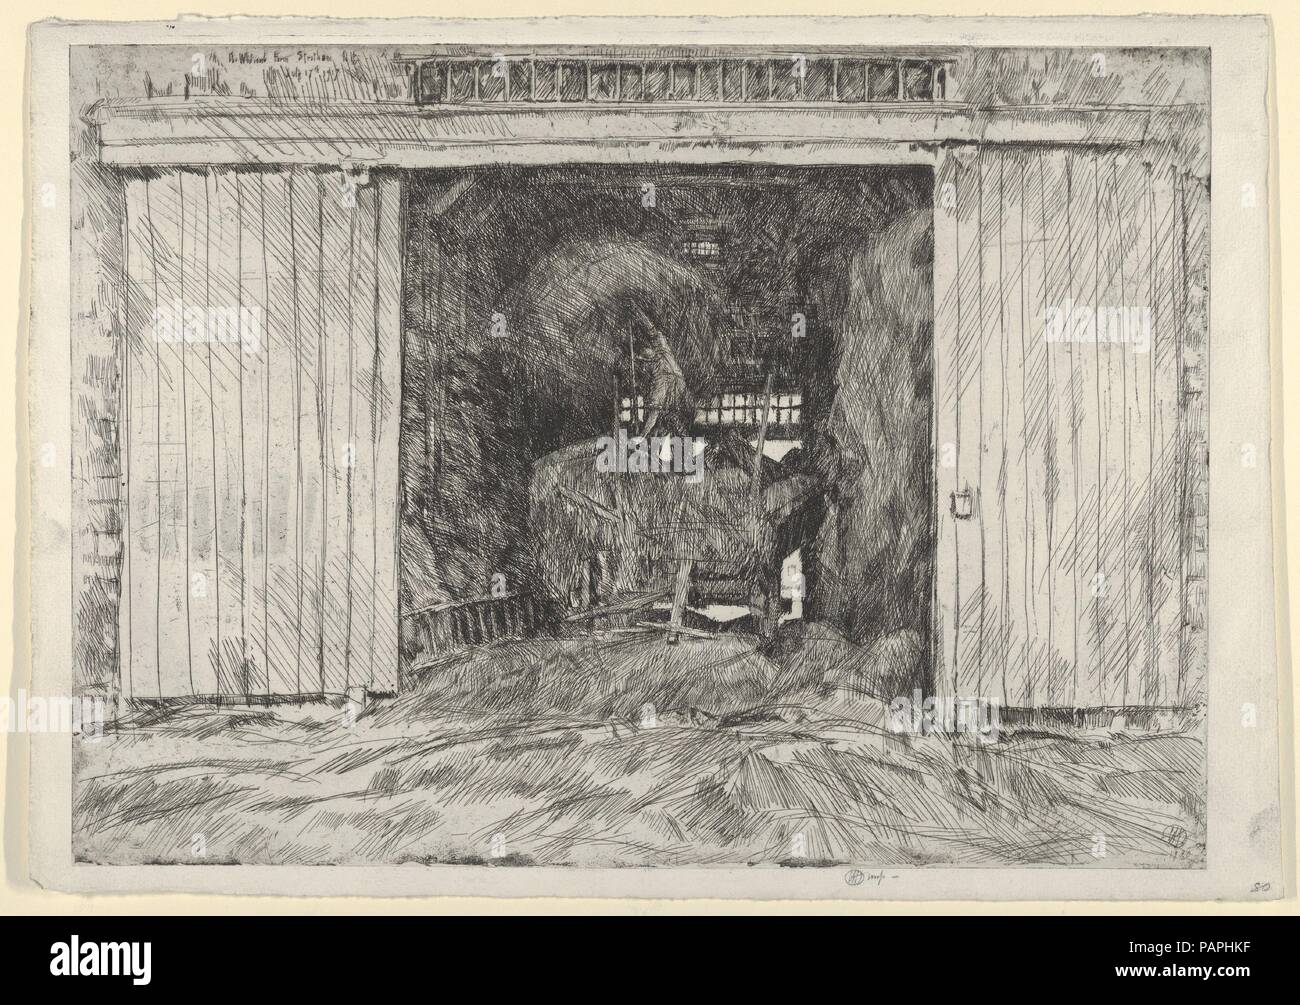 The Hay Barn. Artist: Childe Hassam (American, Dorchester, Massachusetts 1859-1935 East Hampton, New York). Dimensions: Plate: 10 5/16 x 14 1/4 in. (26.2 x 36.2 cm)  Sheet: 10 7/8 x 15 3/4 in. (27.6 x 40 cm). Date: 1920. Museum: Metropolitan Museum of Art, New York, USA. Stock Photo